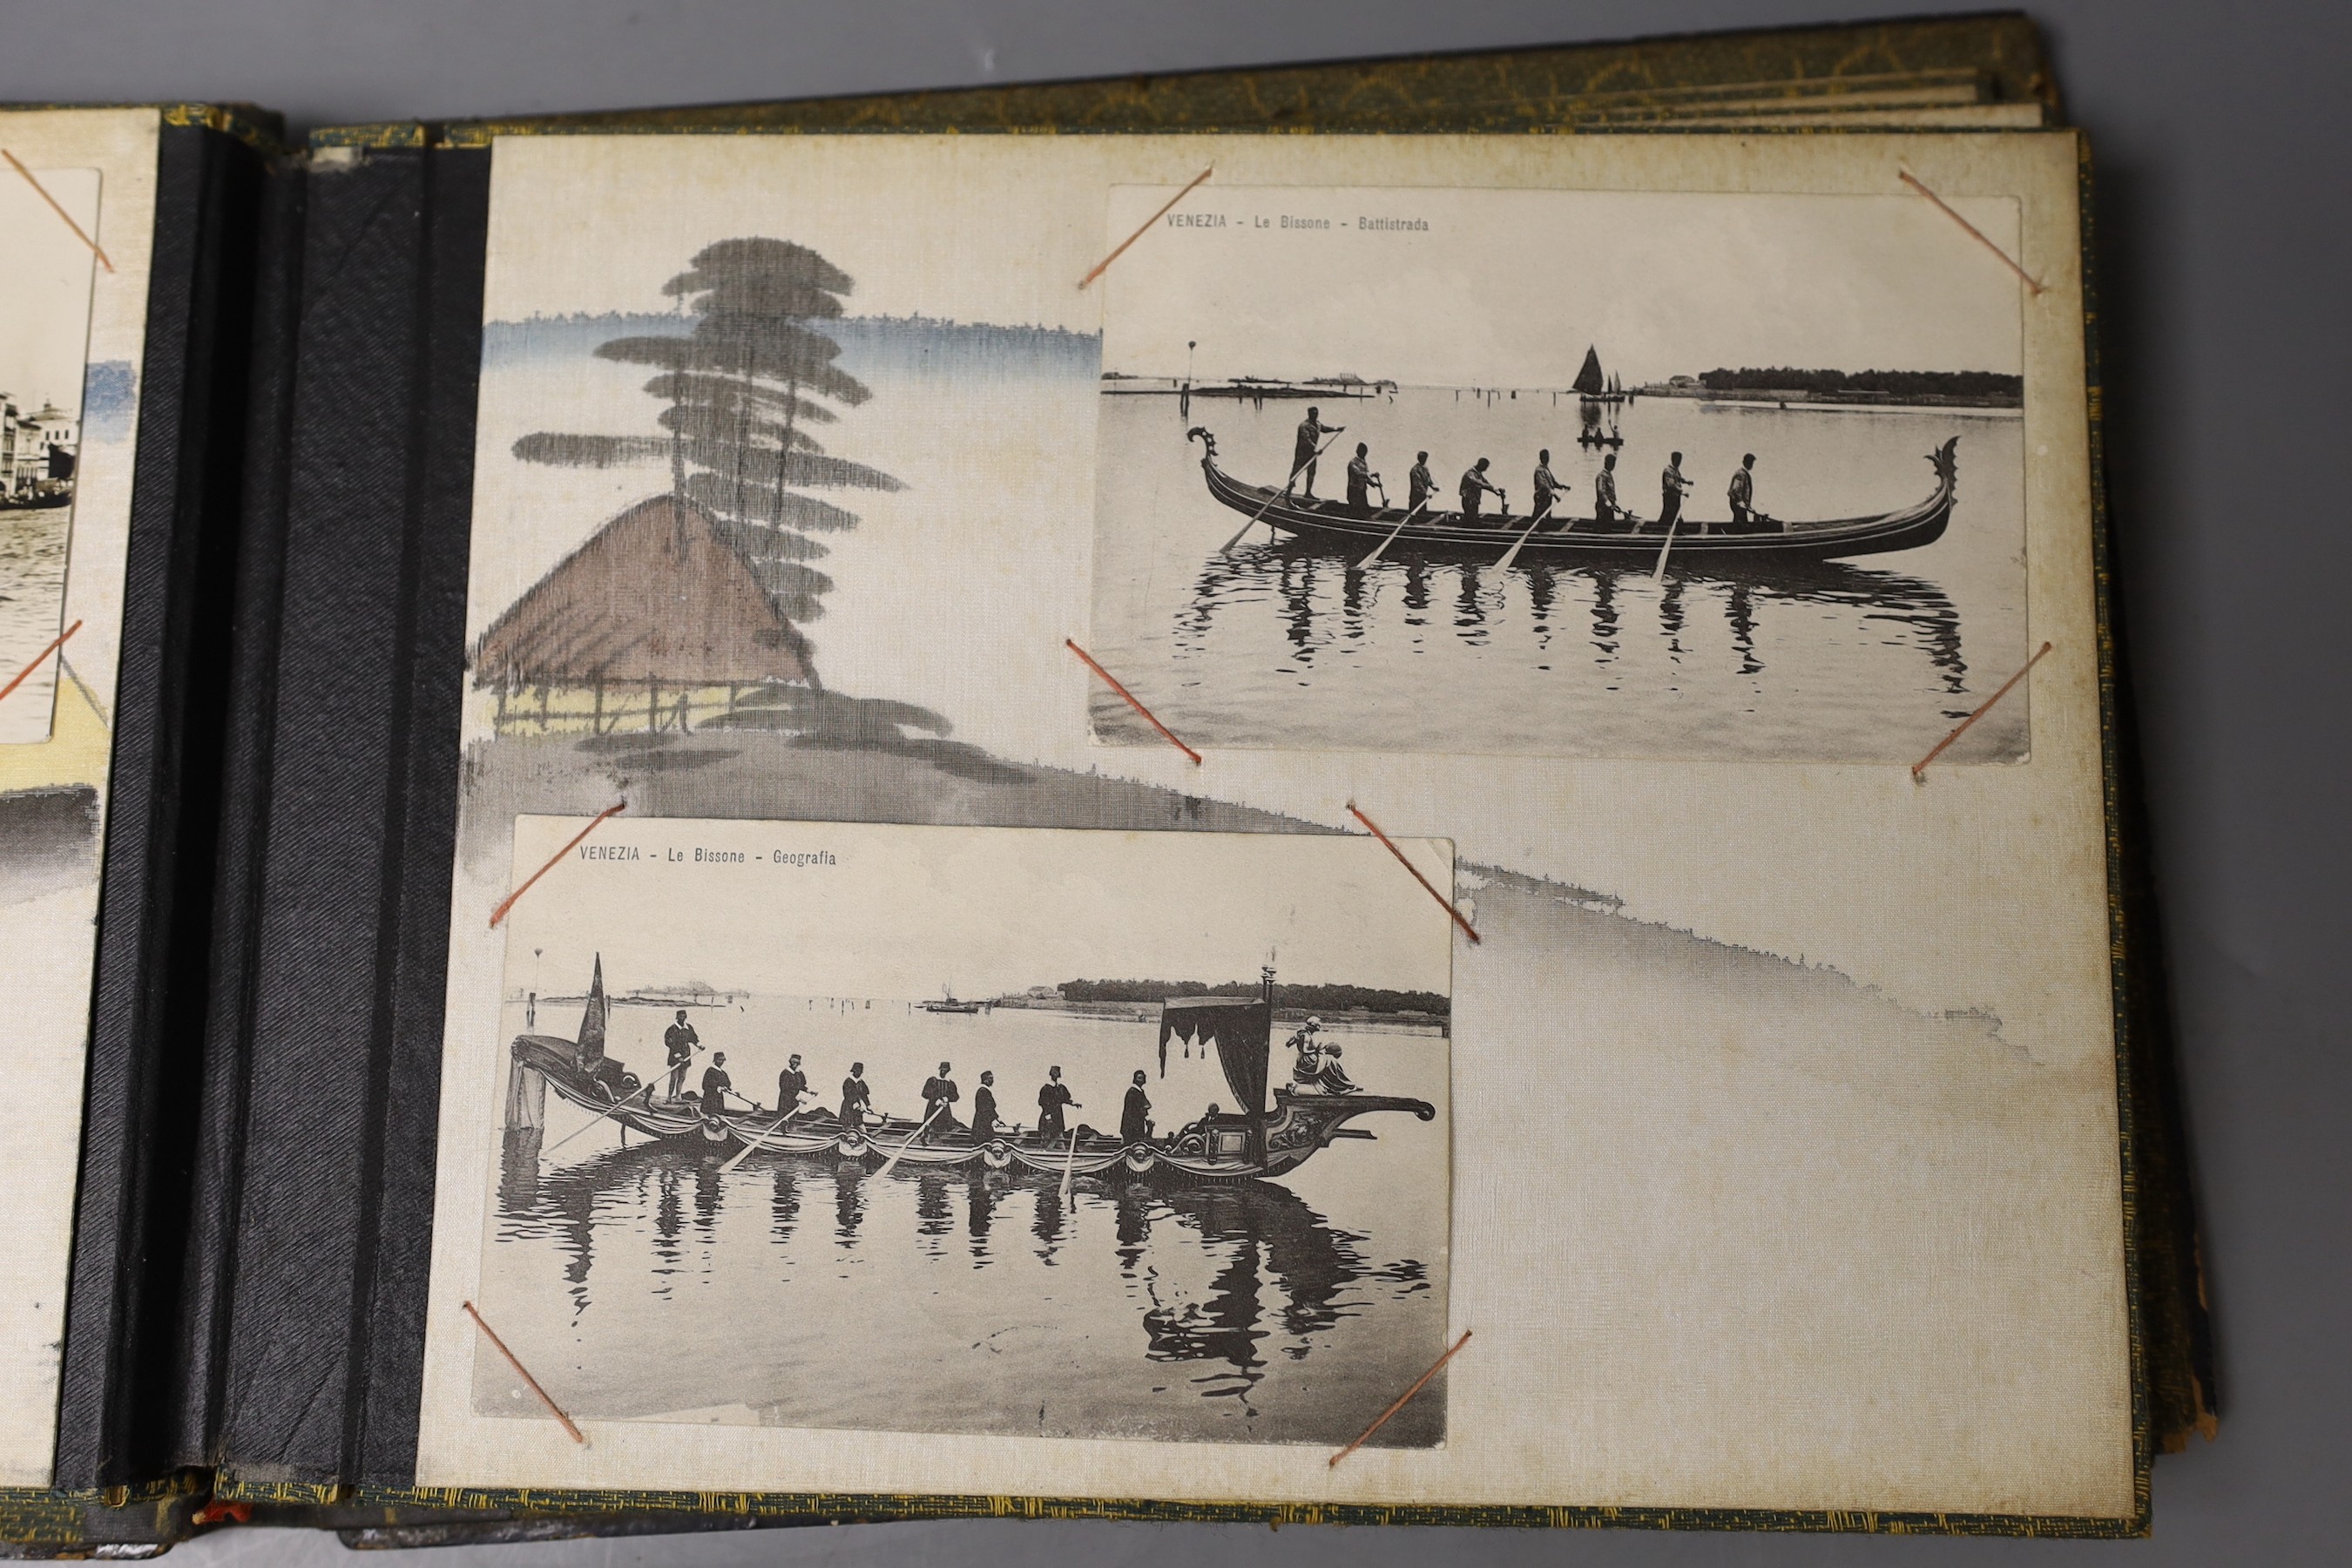 A black lacquer album containing photos of Venice, Penang and China